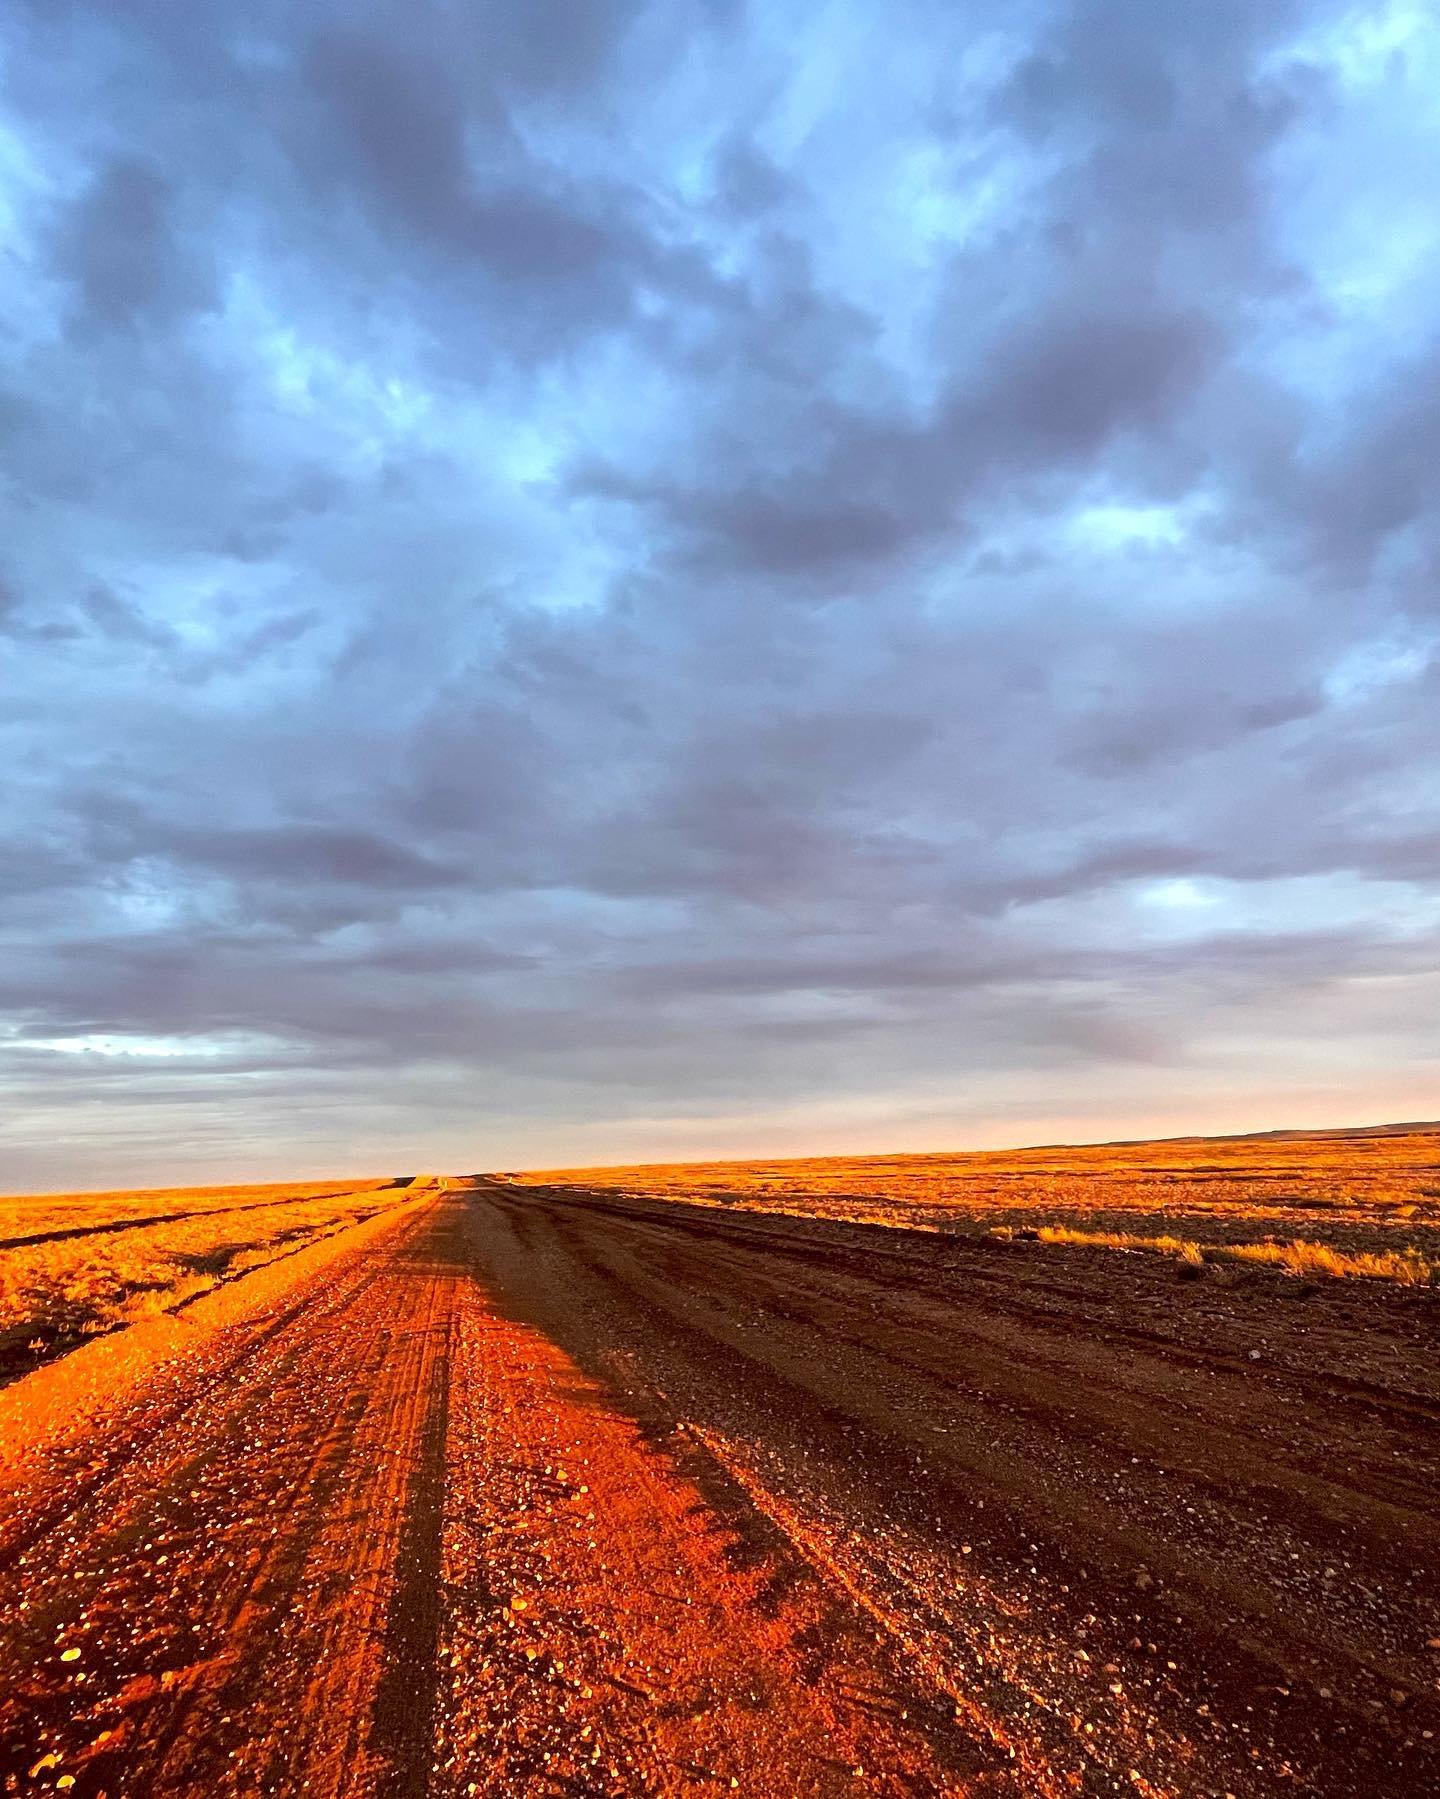 Photograph of the wide open plains of Tipooburra taken by Jasmine Miikika craciun